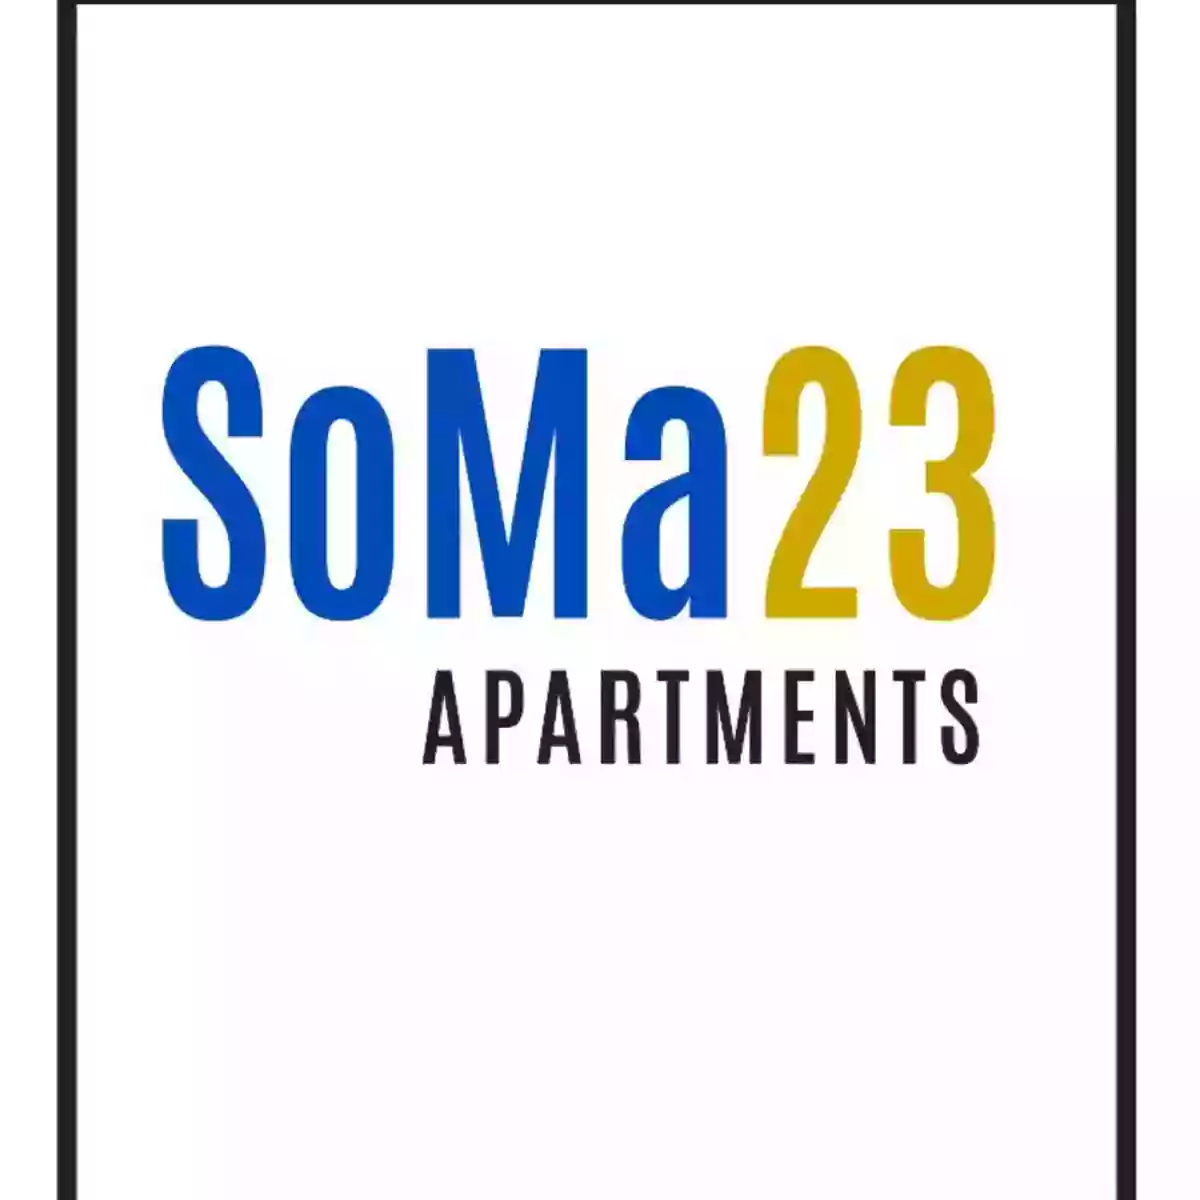 SoMa 23 Apartments